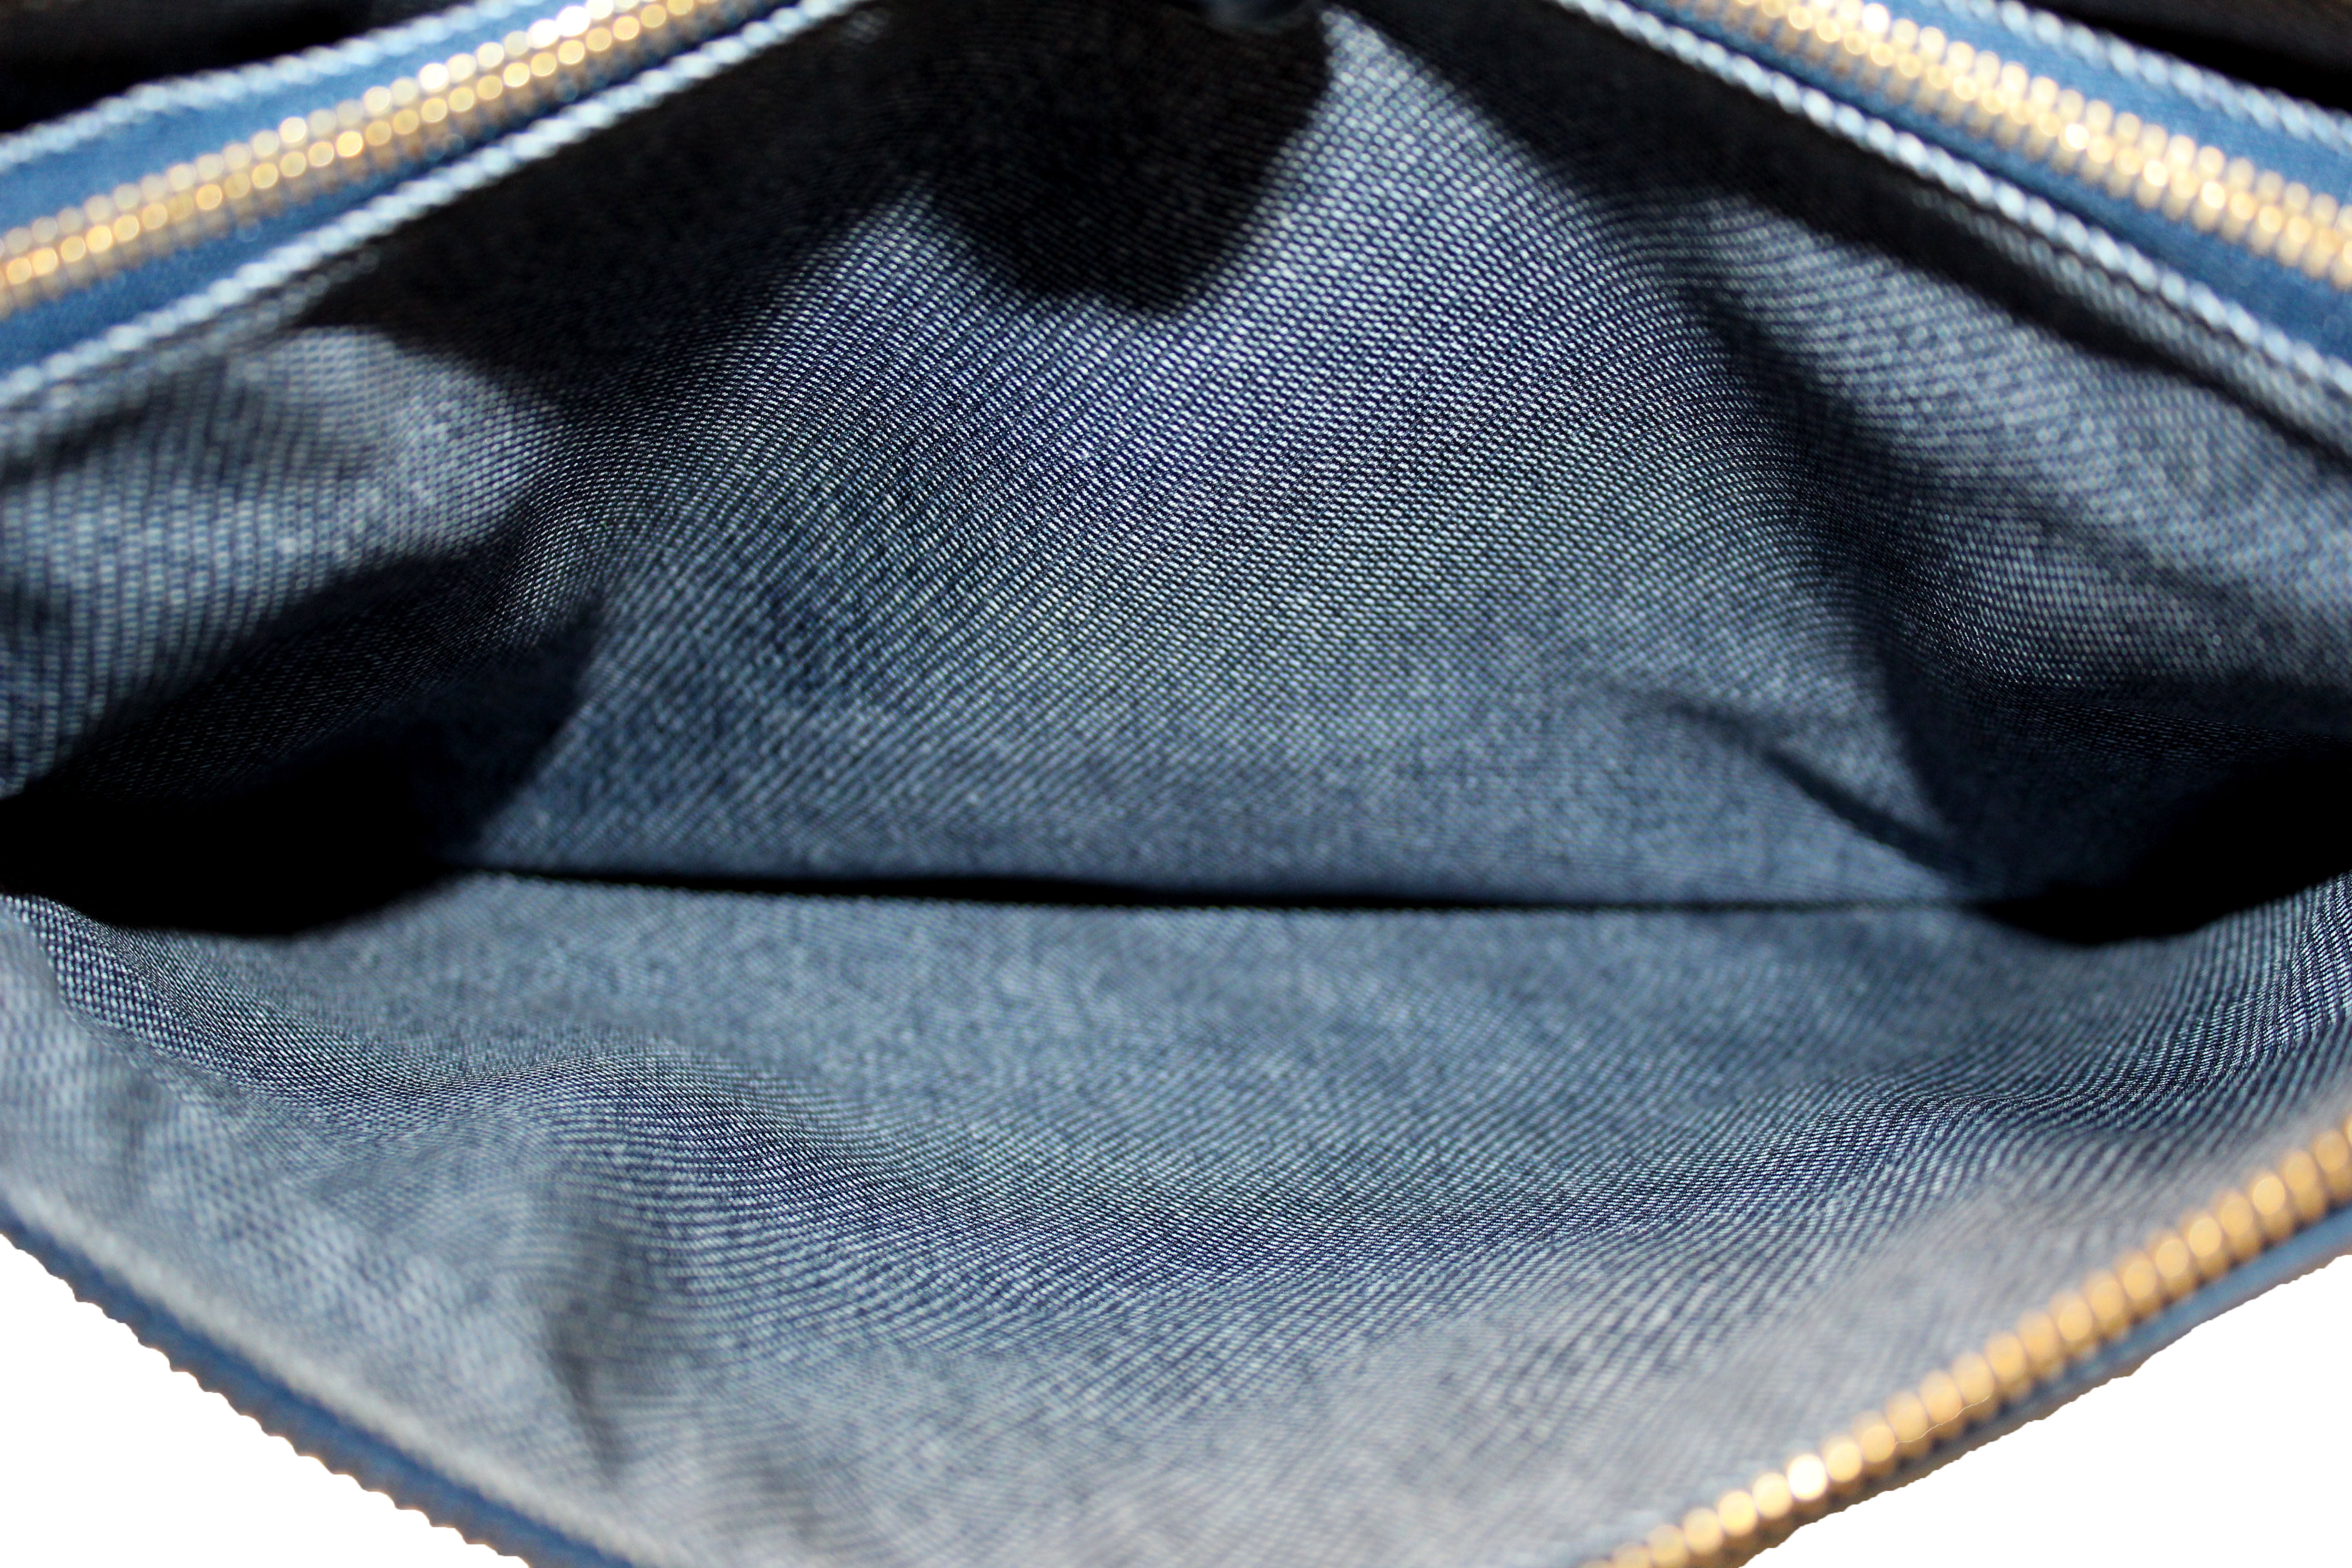 Authentic Louis Vuitton Denim Blue Lambskin Embossed Monogram Coussin PM Bag